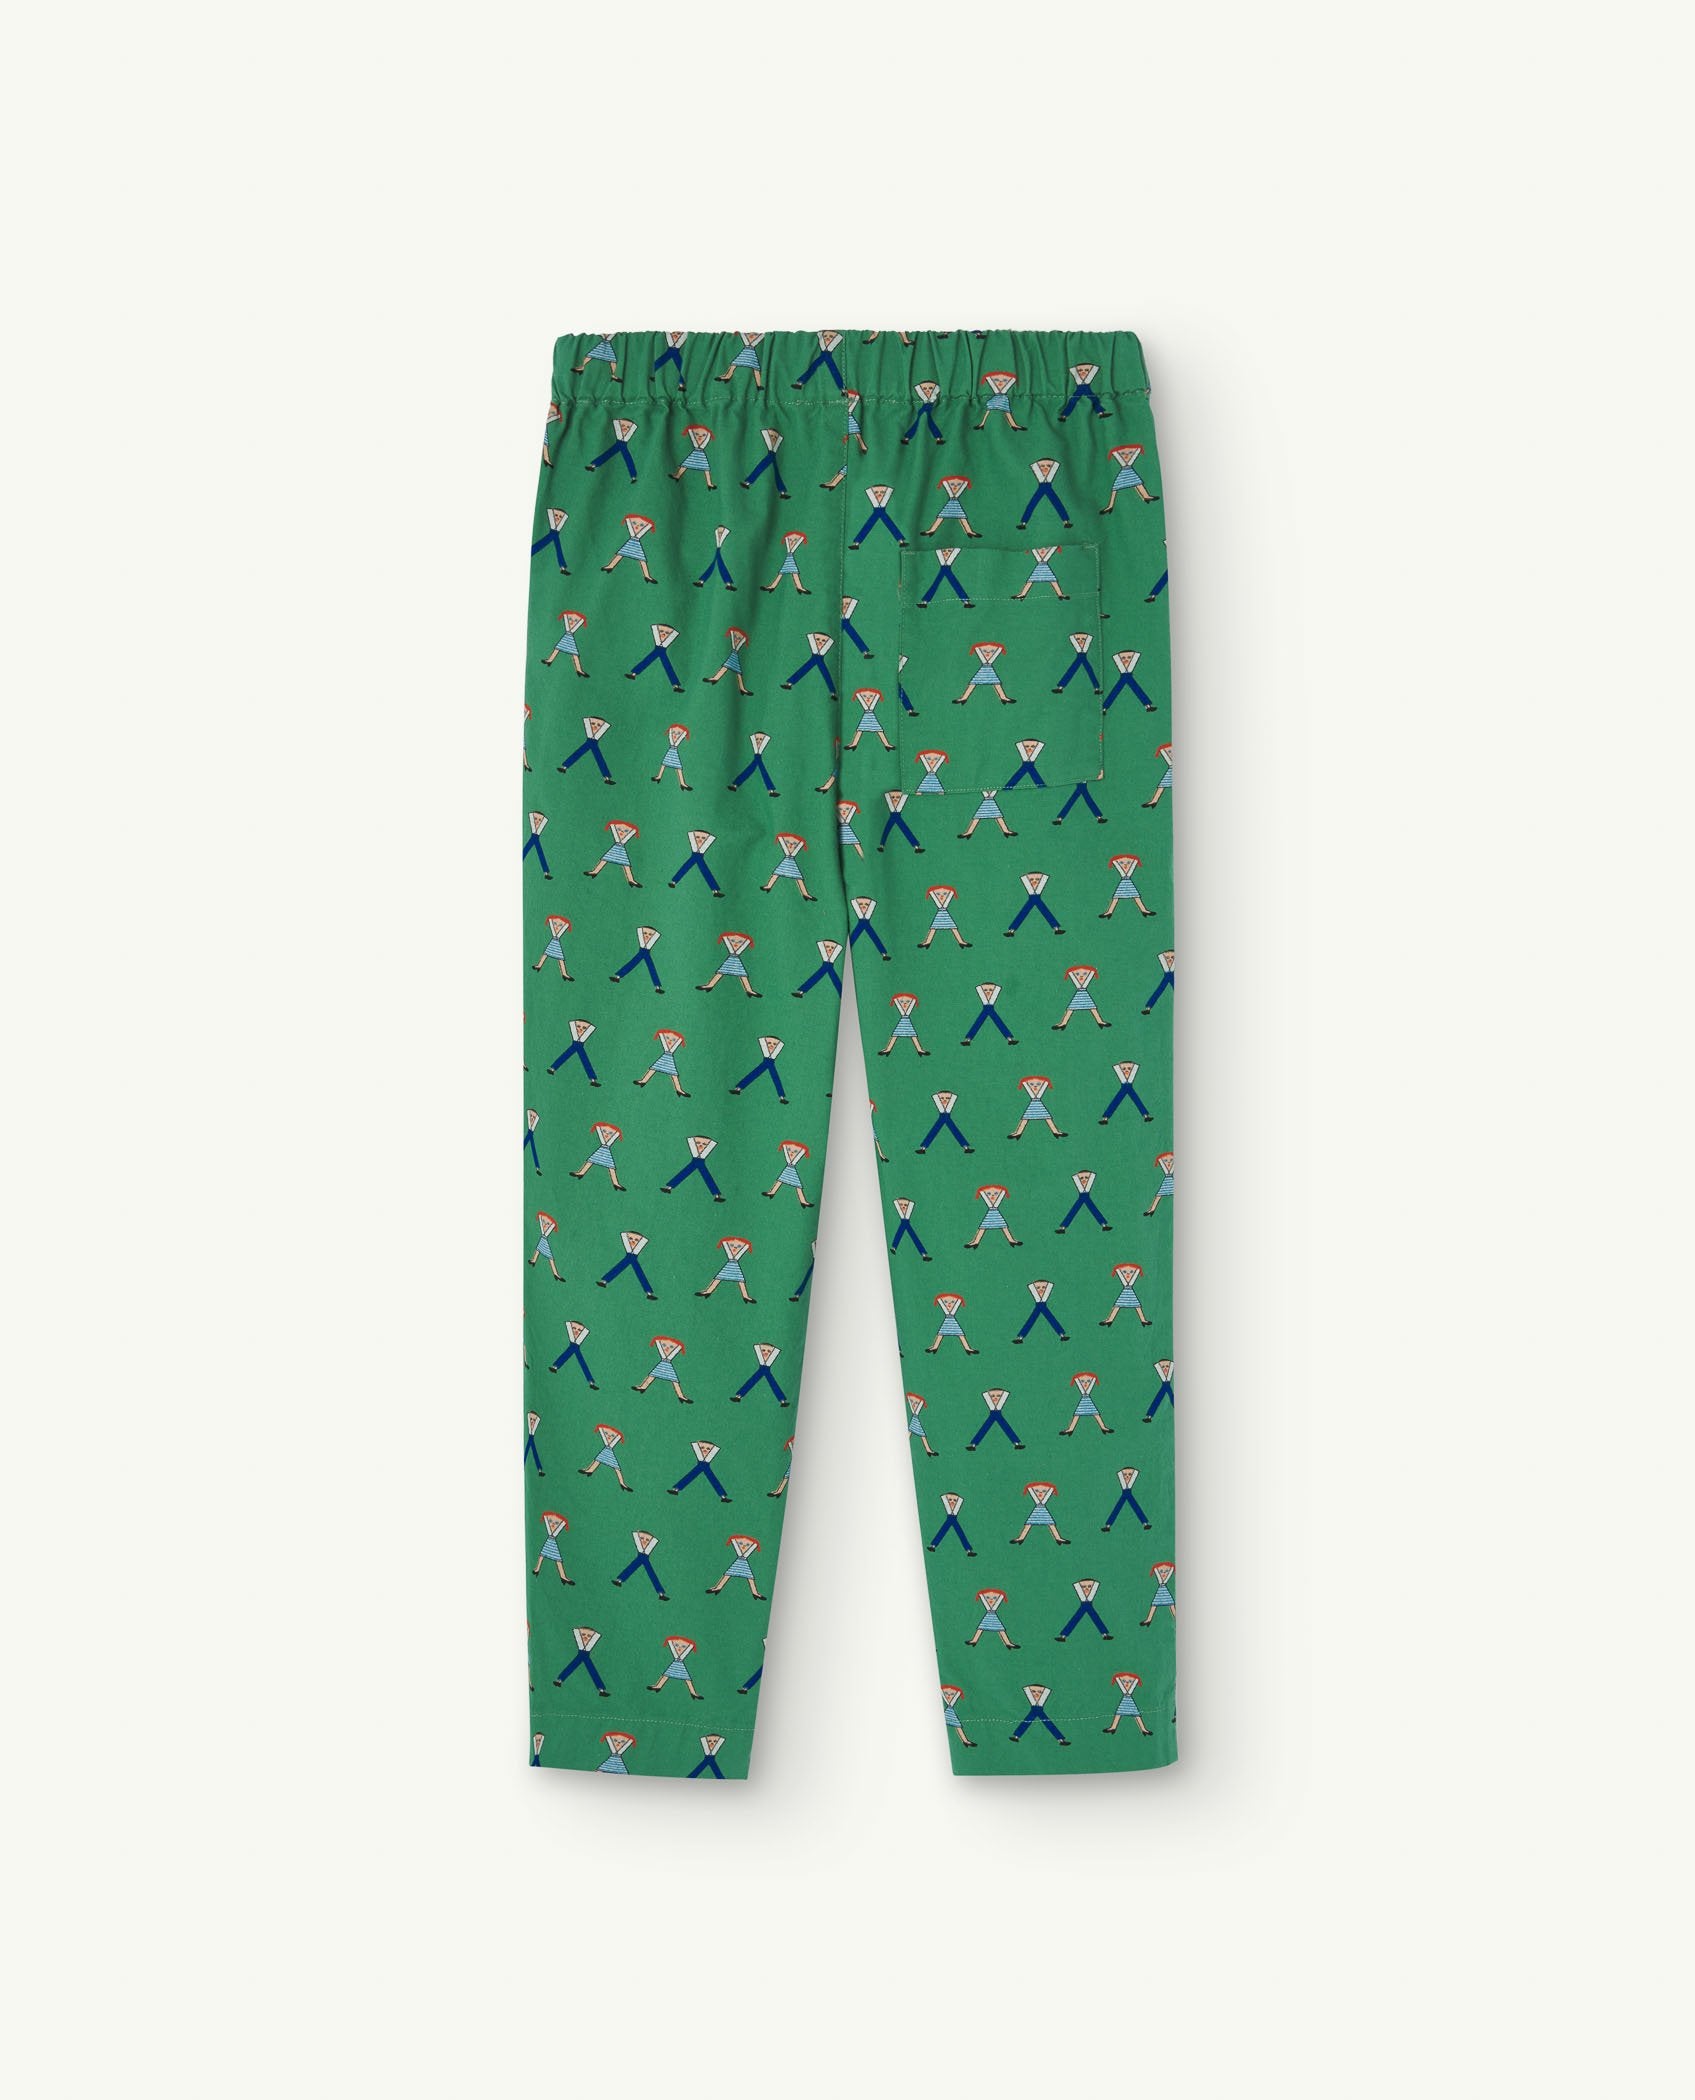 Green Elephant Pants PRODUCT BACK